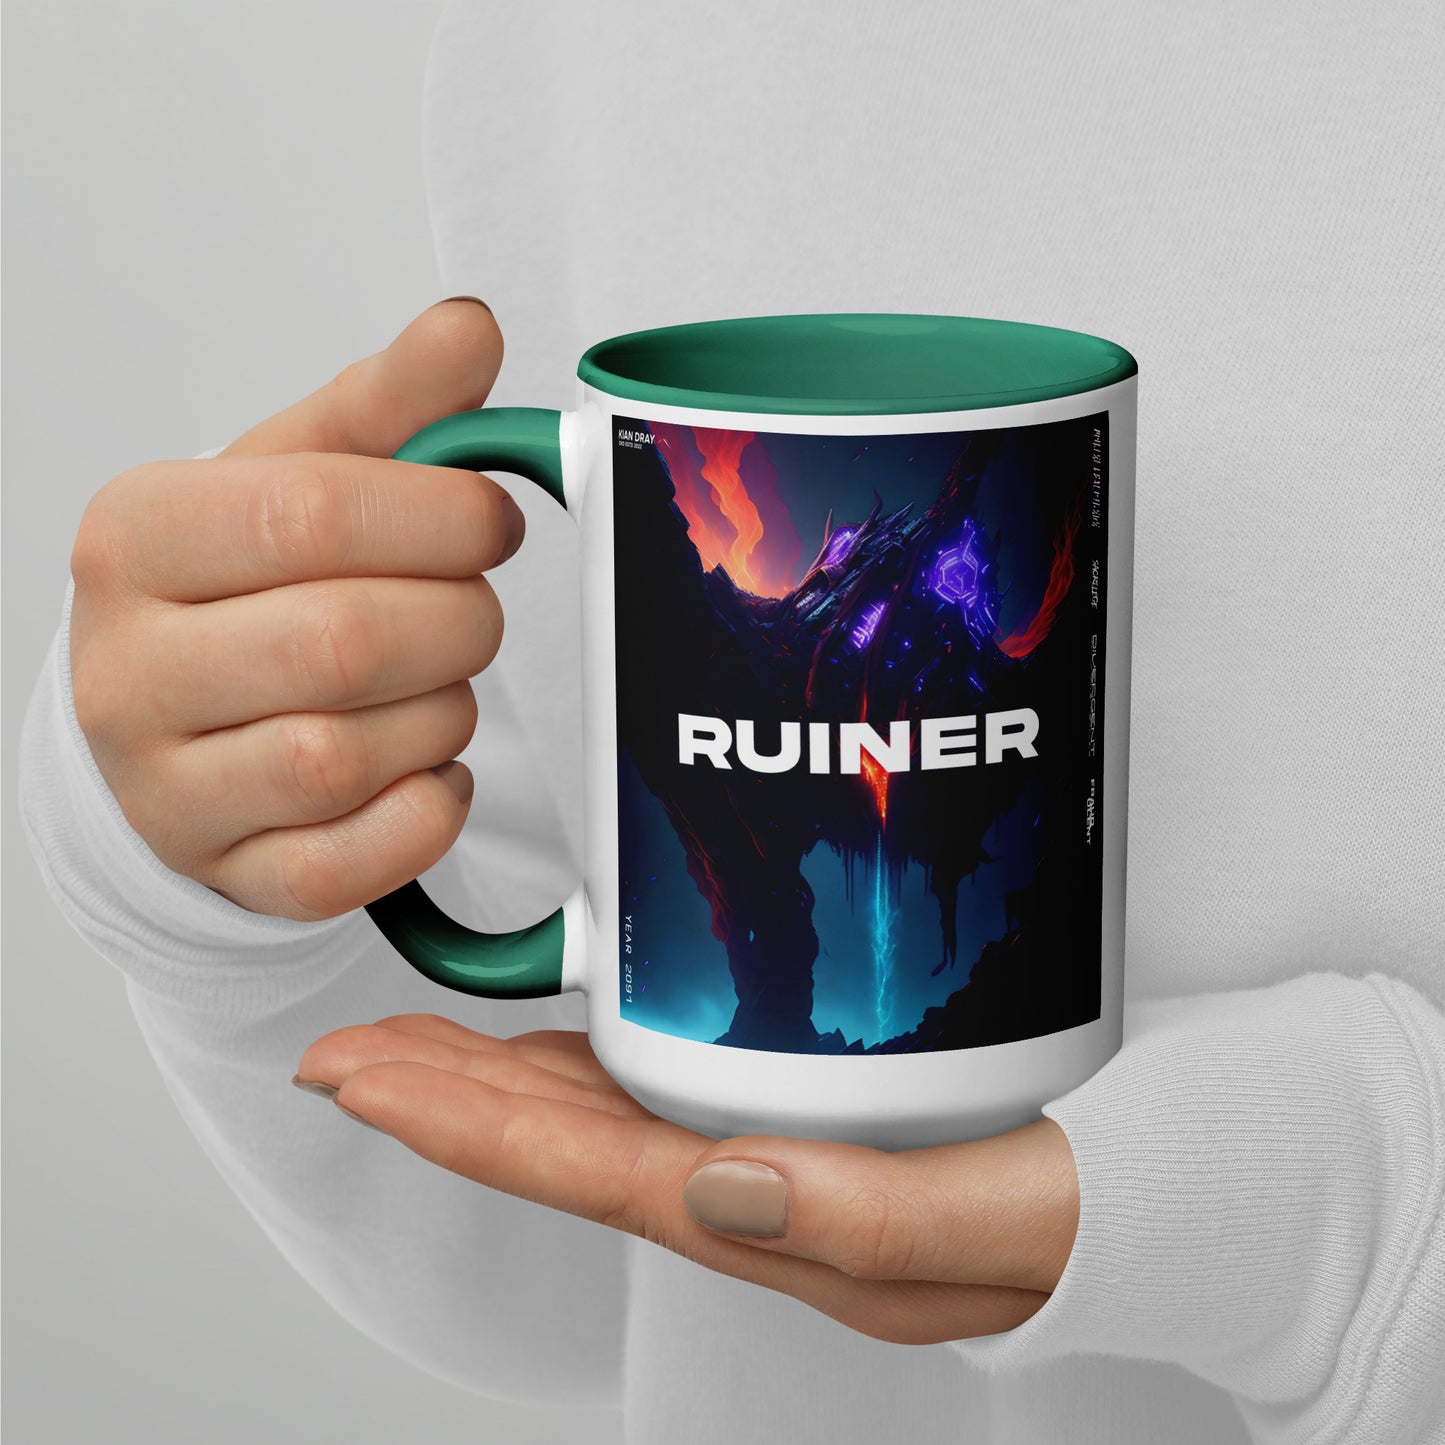 Kian Dray - Ruiner Mug With Color Inside